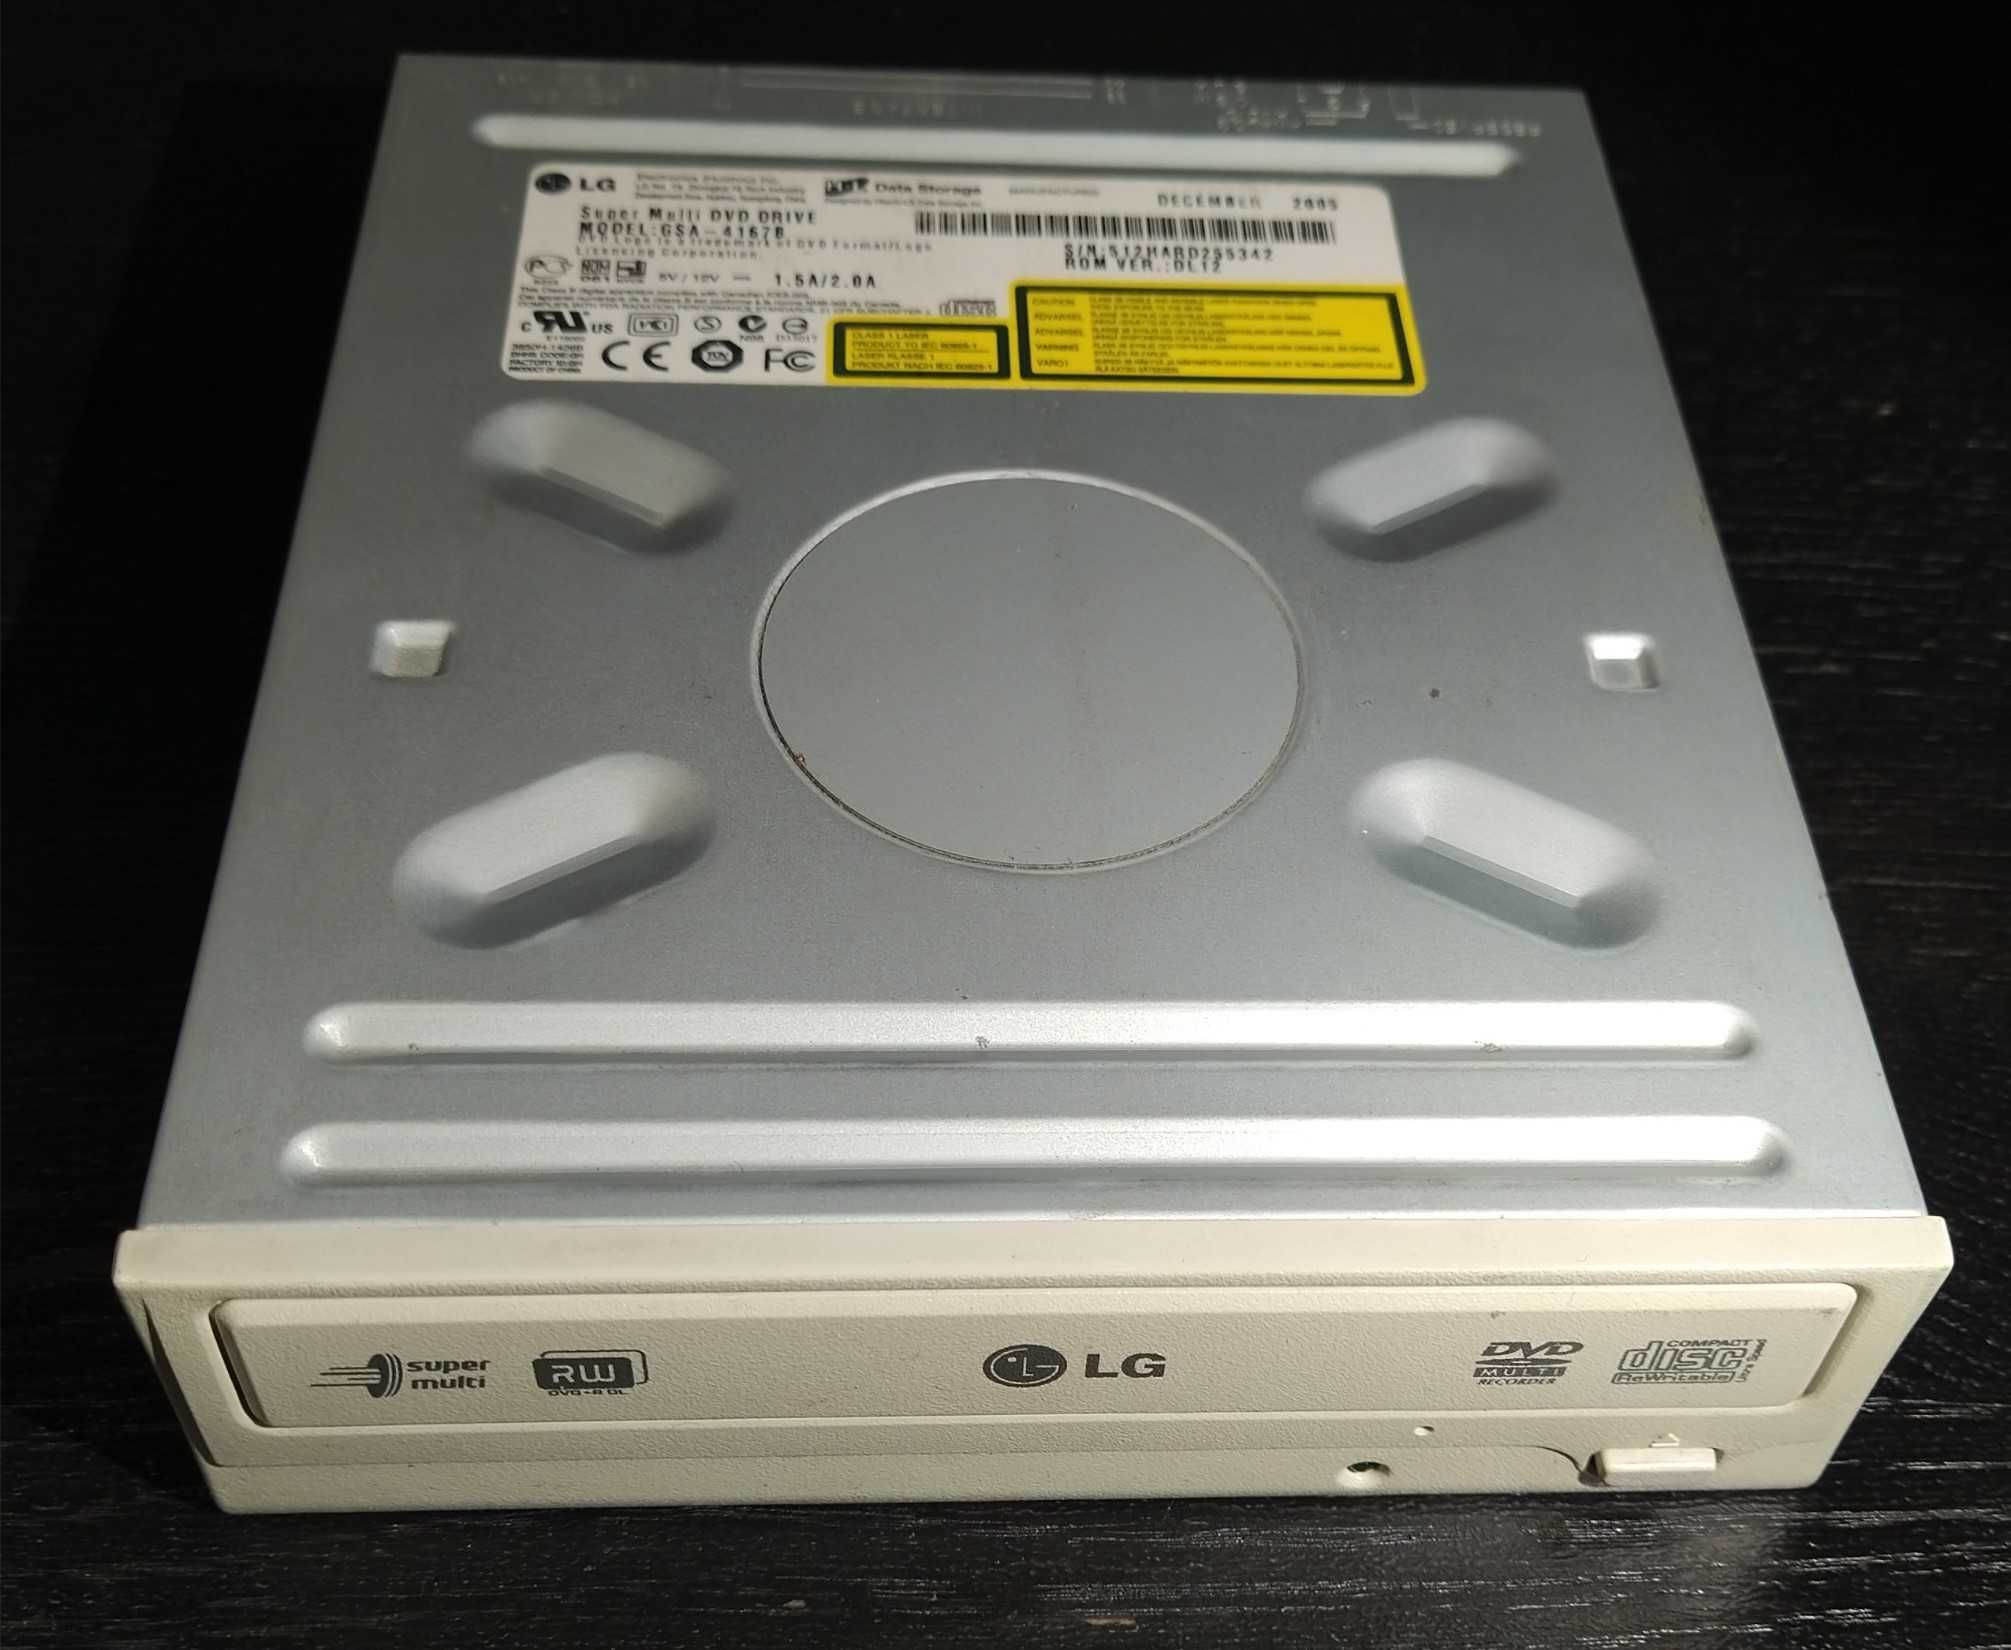 Leitor/gravador DVD para PC, marca LG